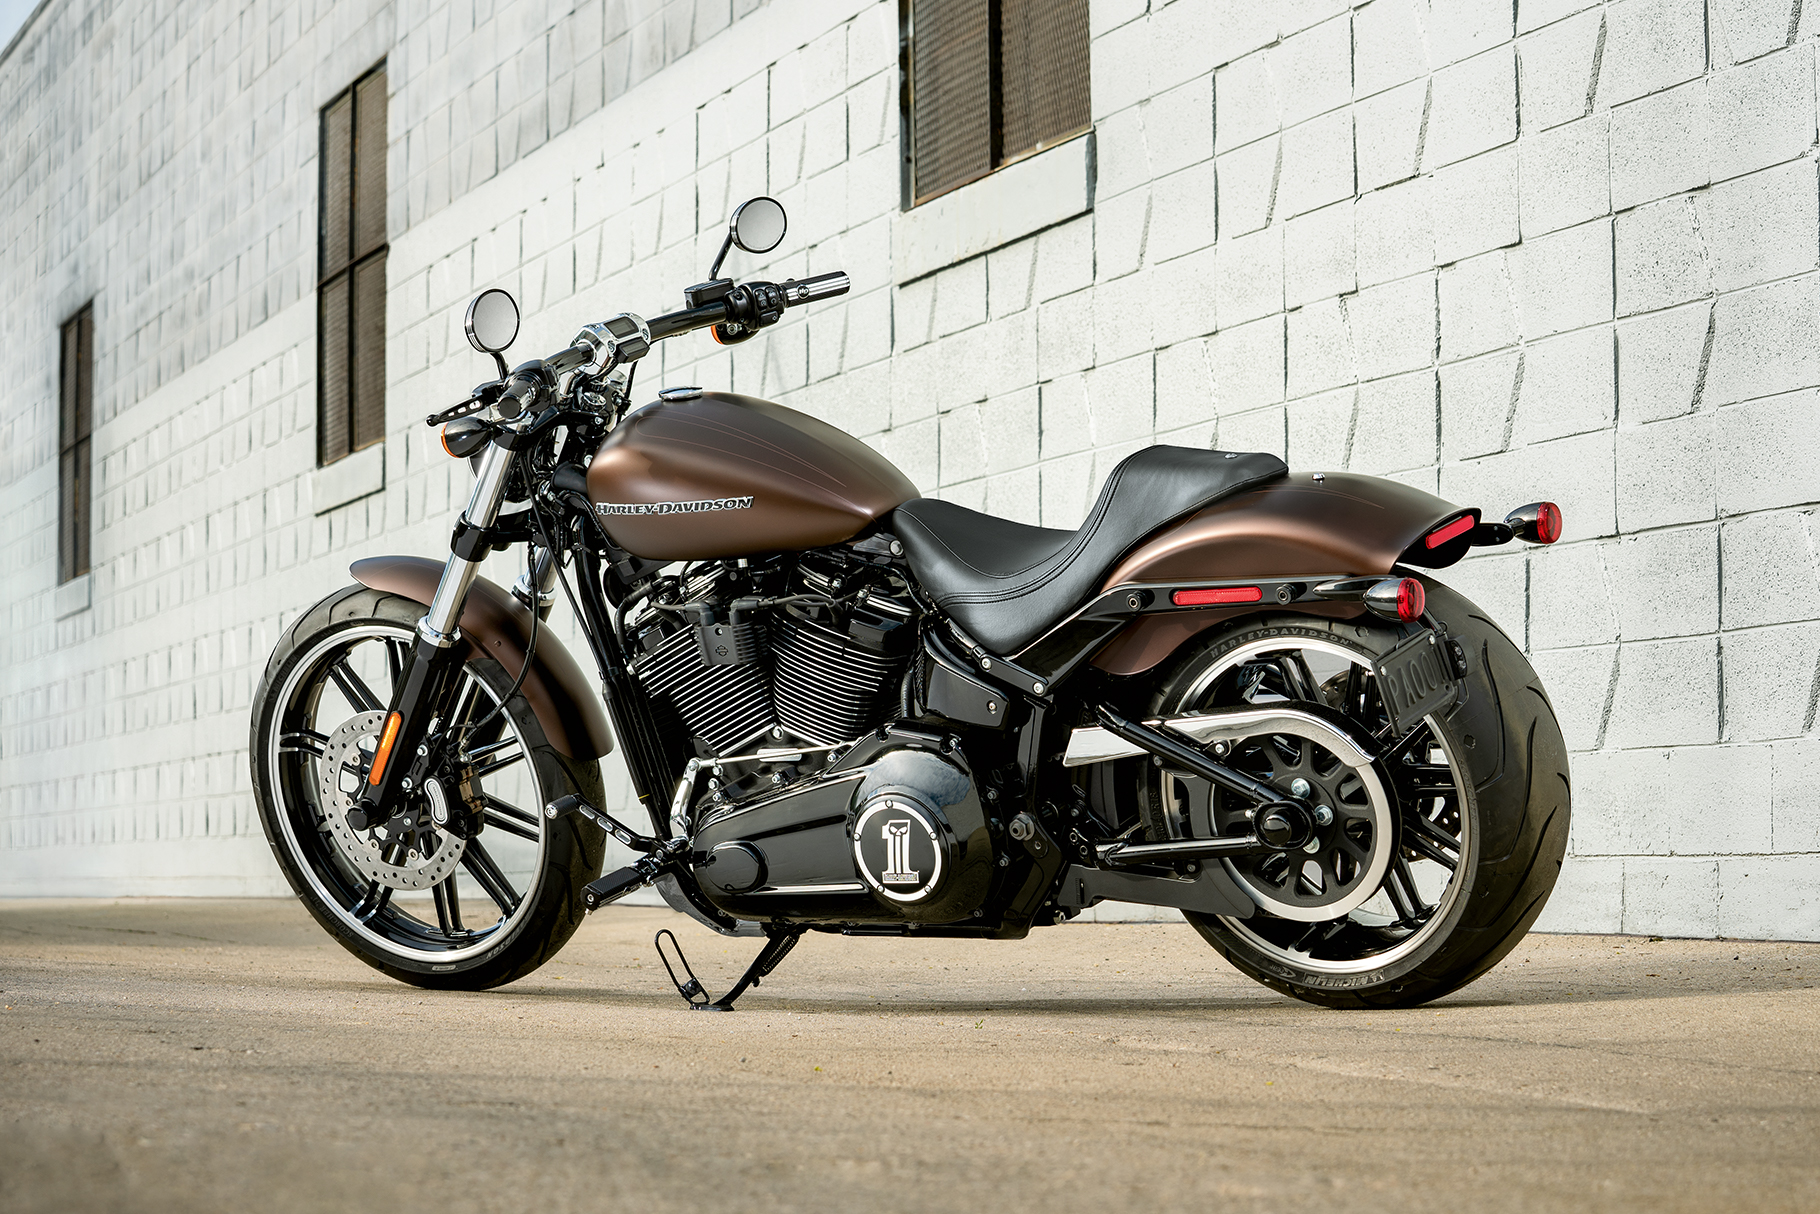  2019 Breakout Motorcycle Harley Davidson Australia New 